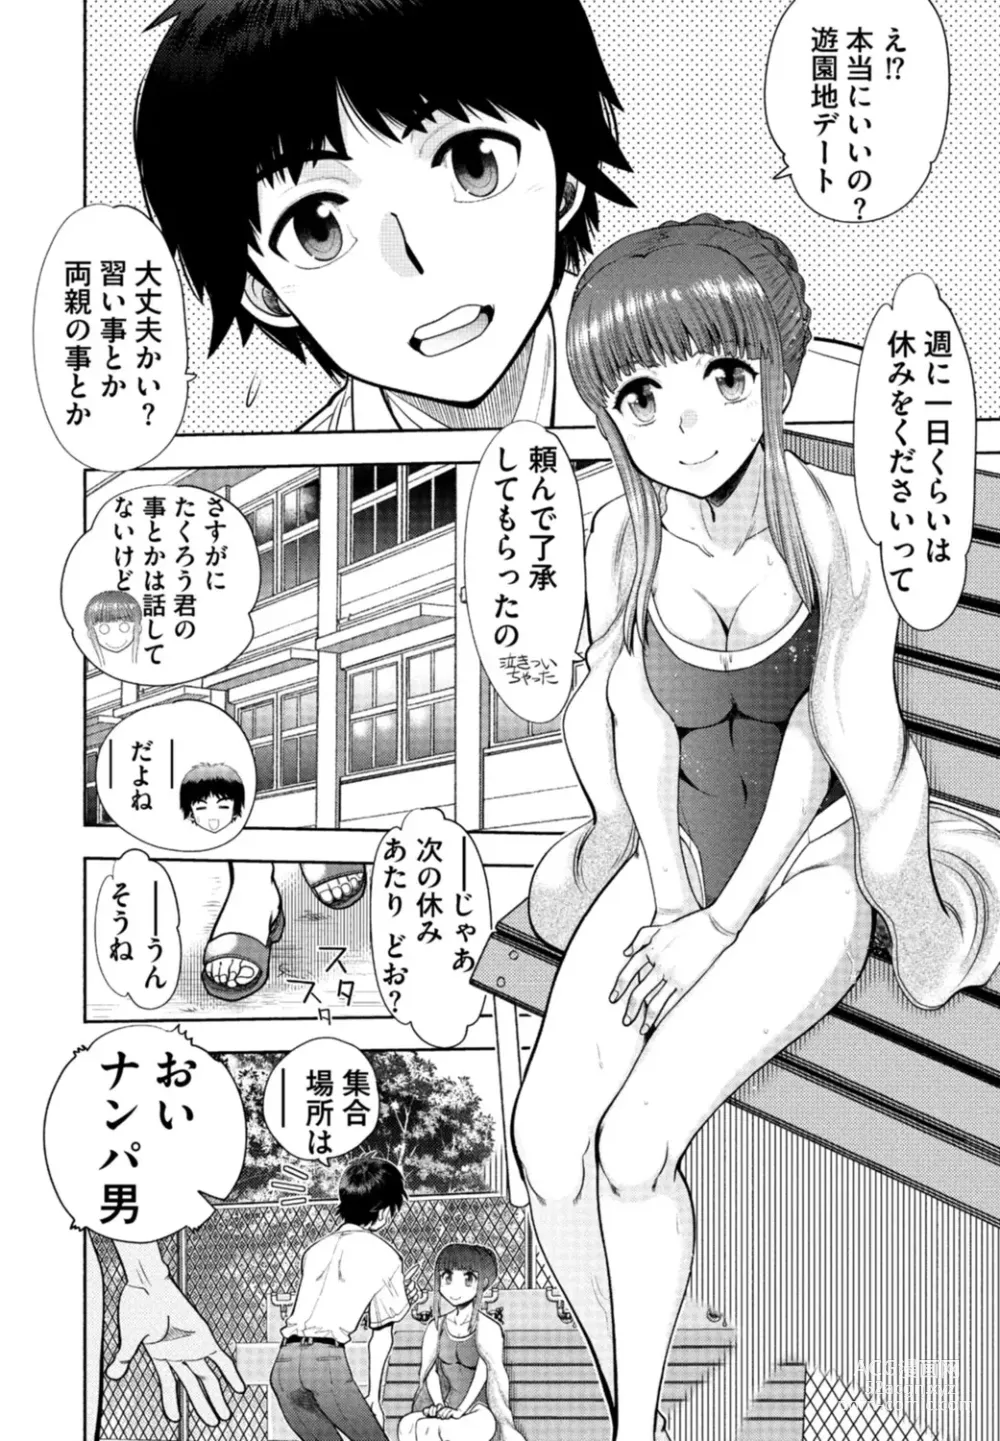 Page 6 of manga Doukyuusei  Remake Adult Edition